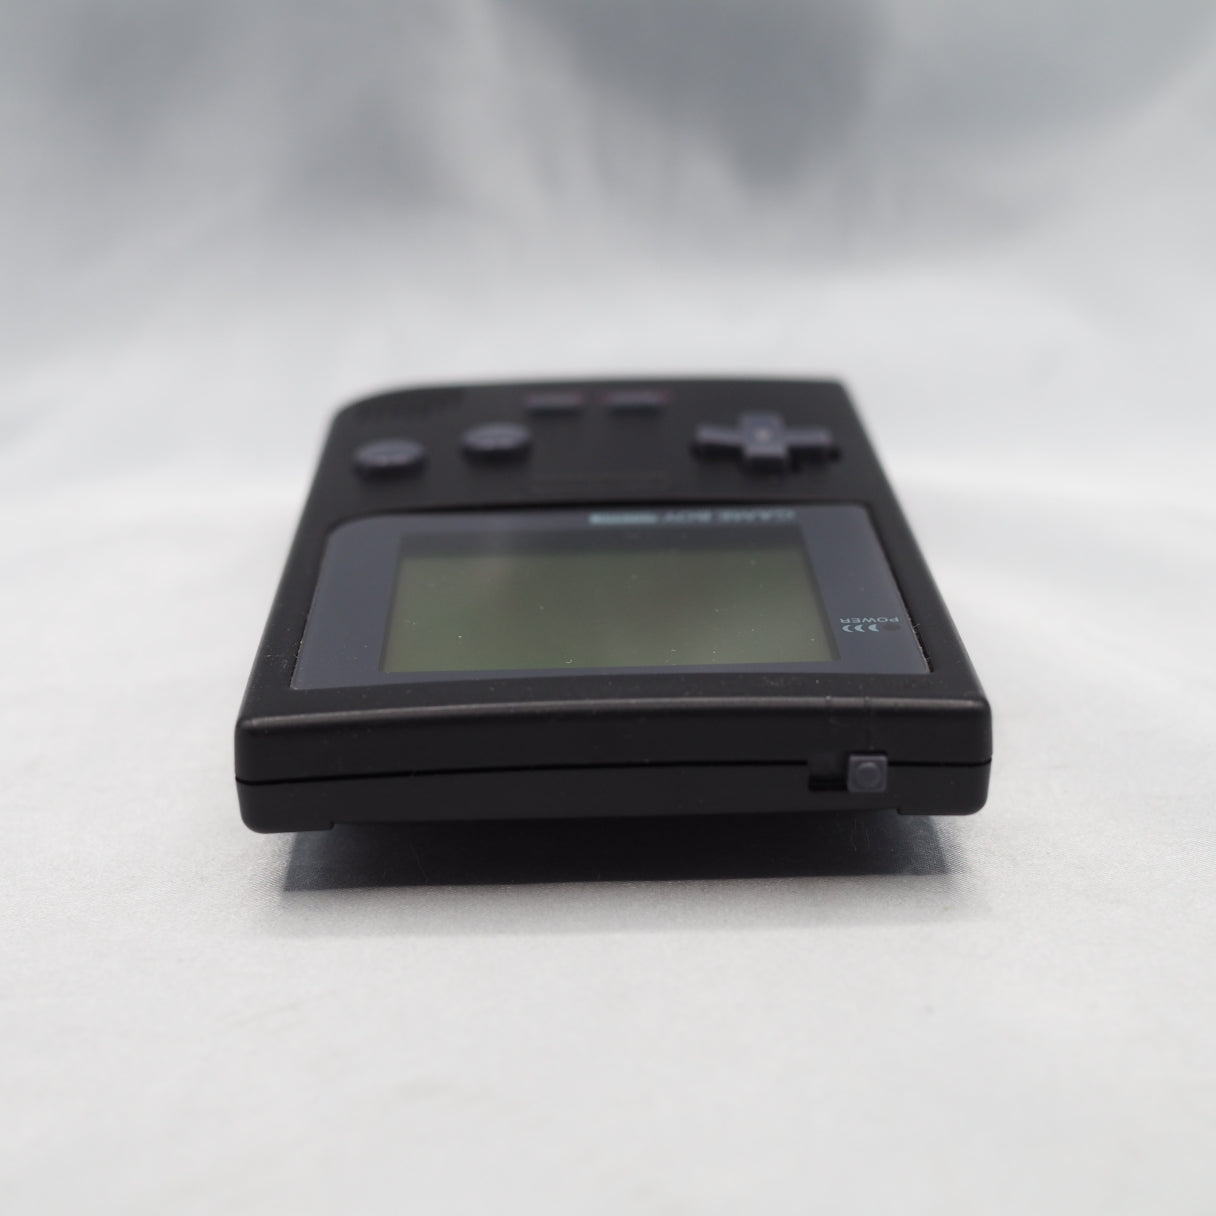 Nintendo GAMEBOY Pocket Console MGB-001 [Black]